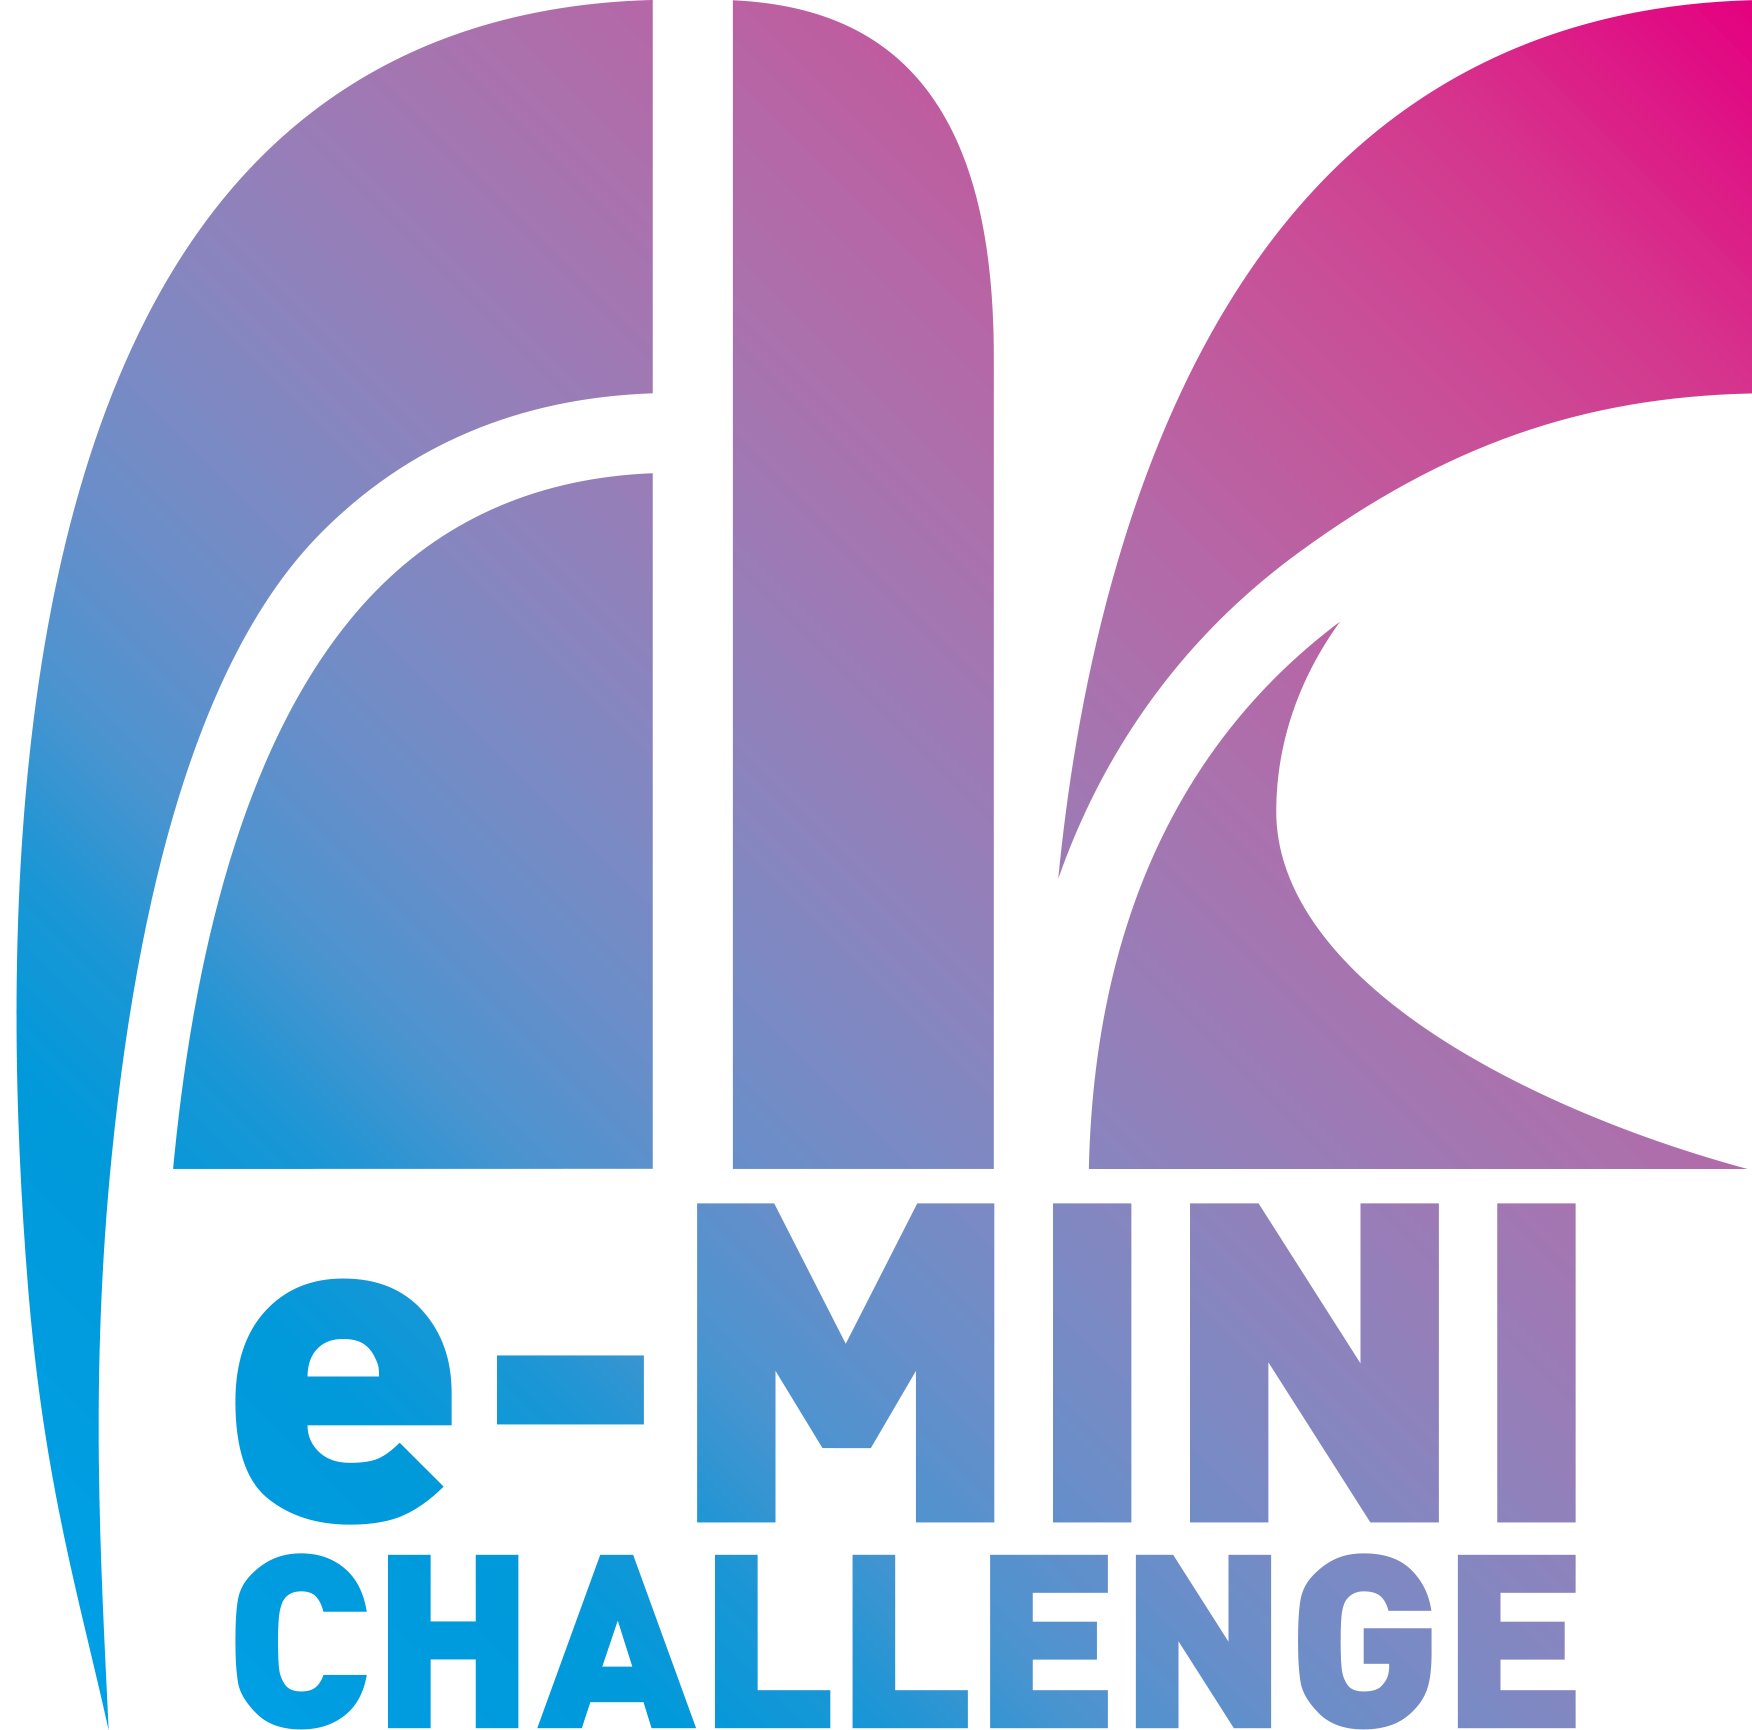 e-MINI CHALLENGE® 2020 S1 Rd.7 ポイントランキング更新